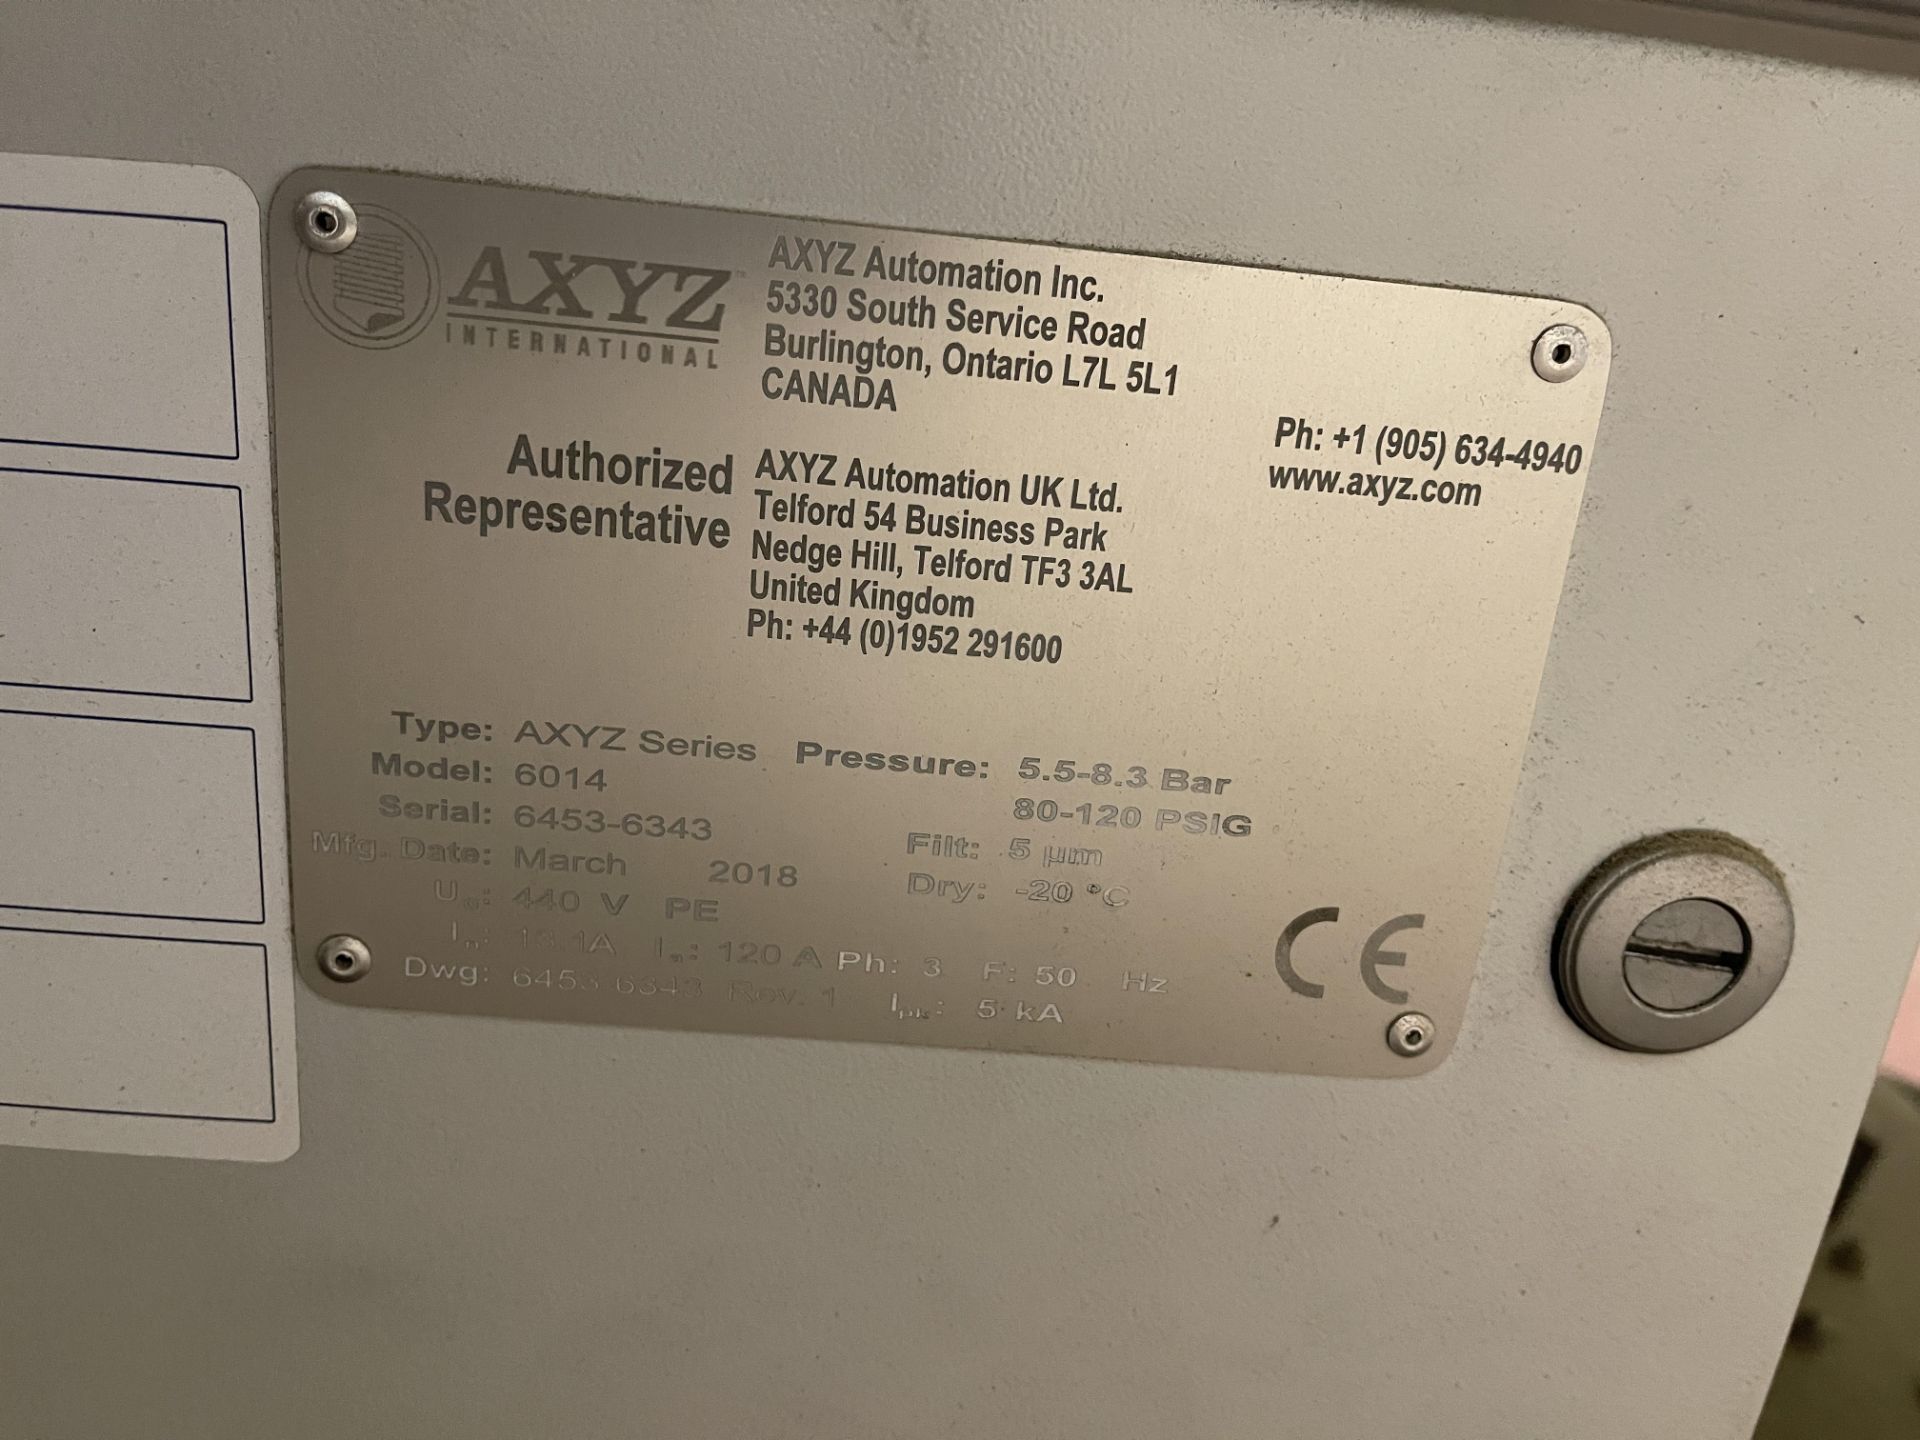 AXYZ 6014 CNC Router, Serial No.6453-6343, (03/2018) - Bild 6 aus 19